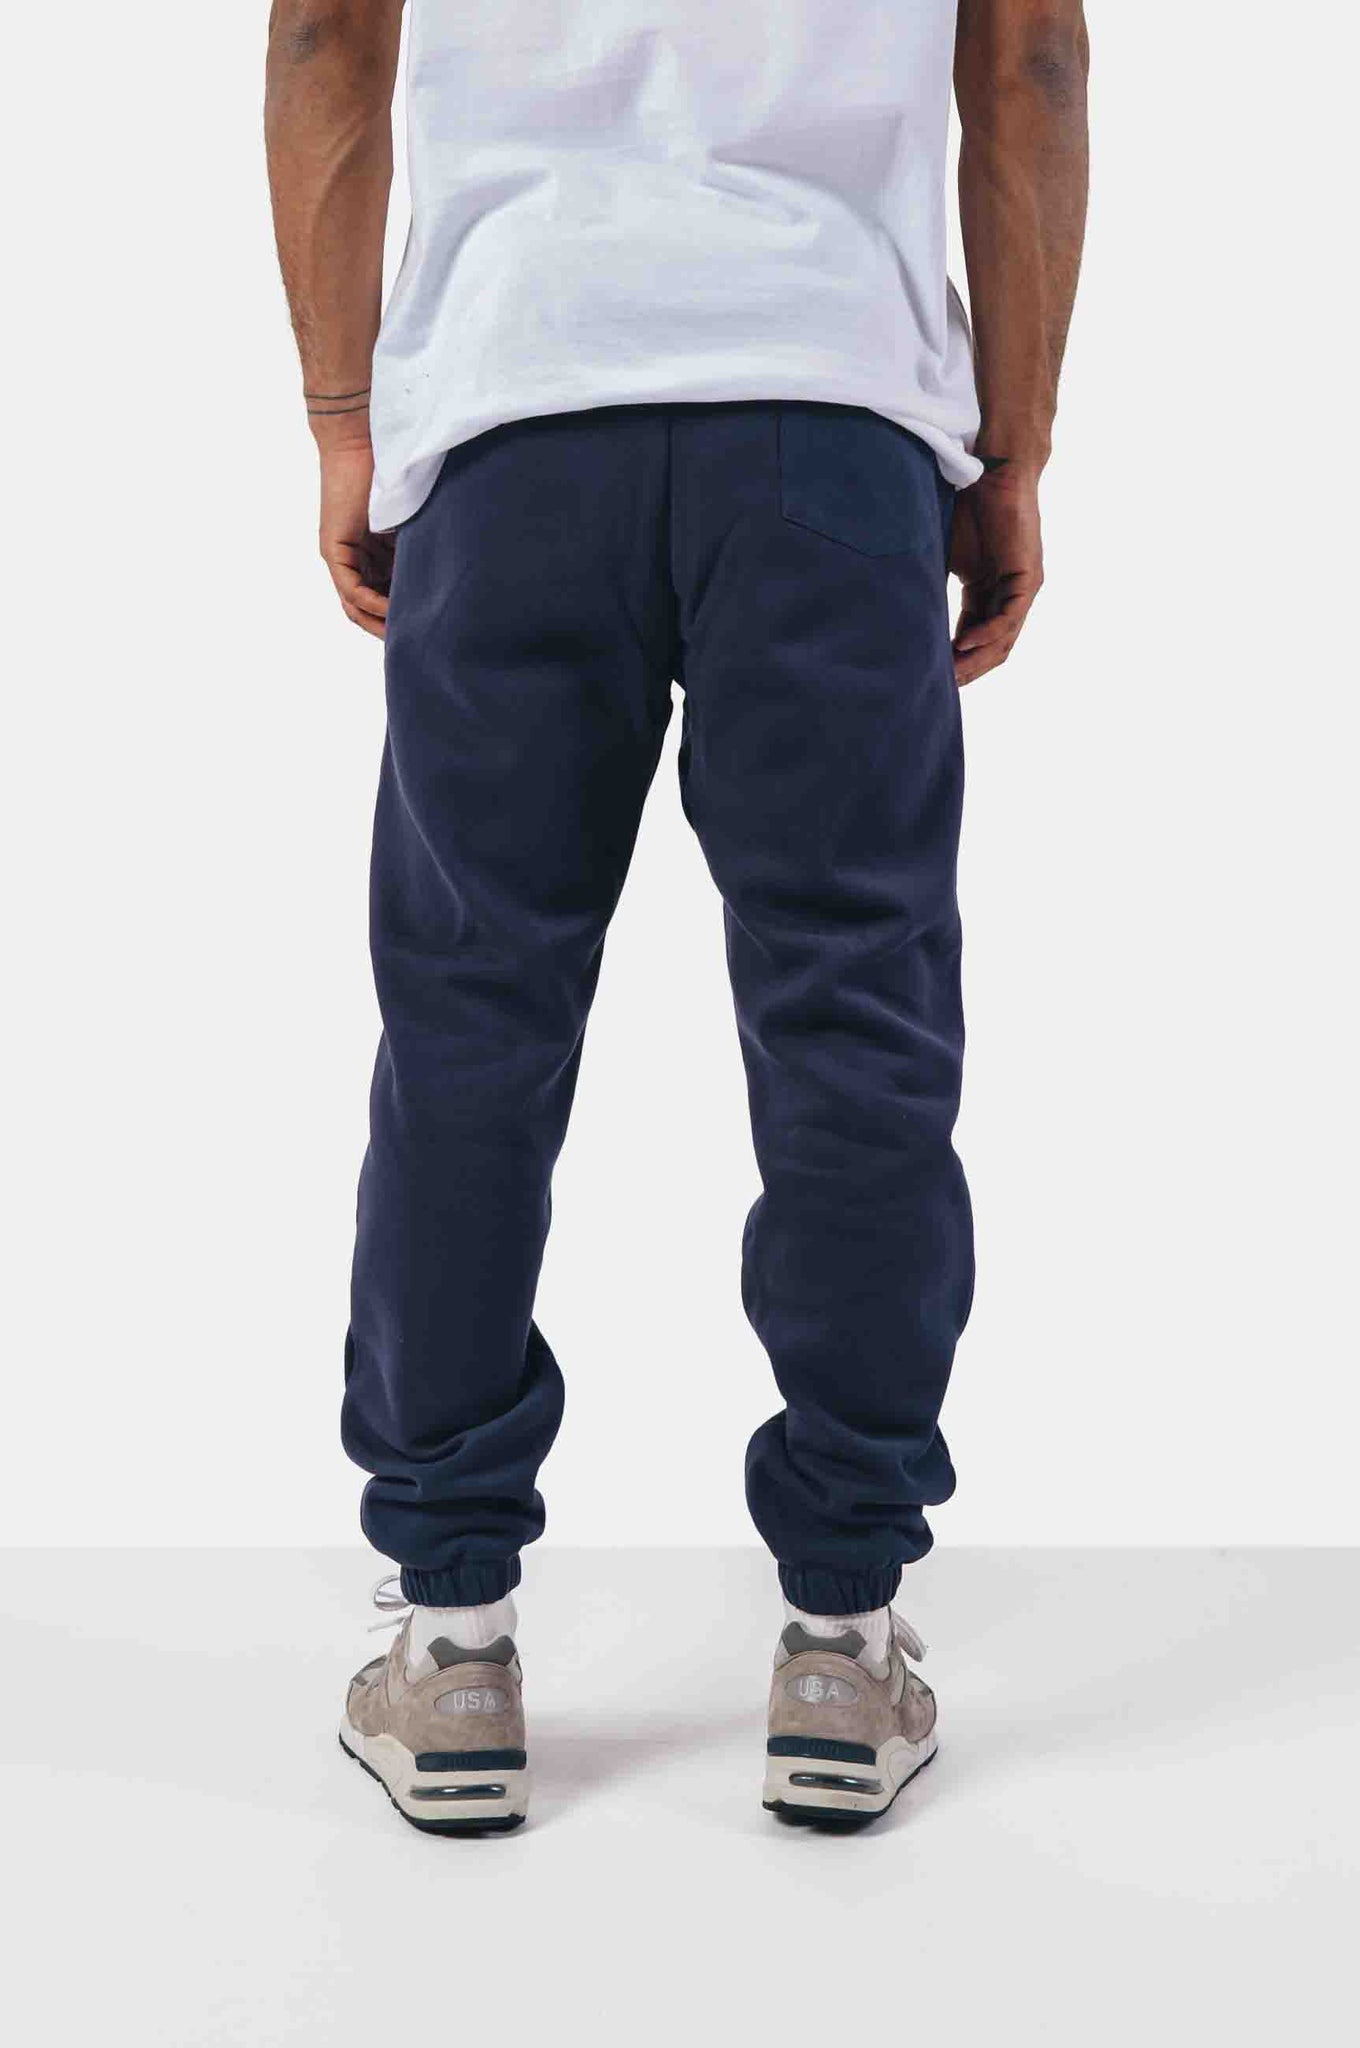 Organic Essential Sweatpants Trendsplant Blue